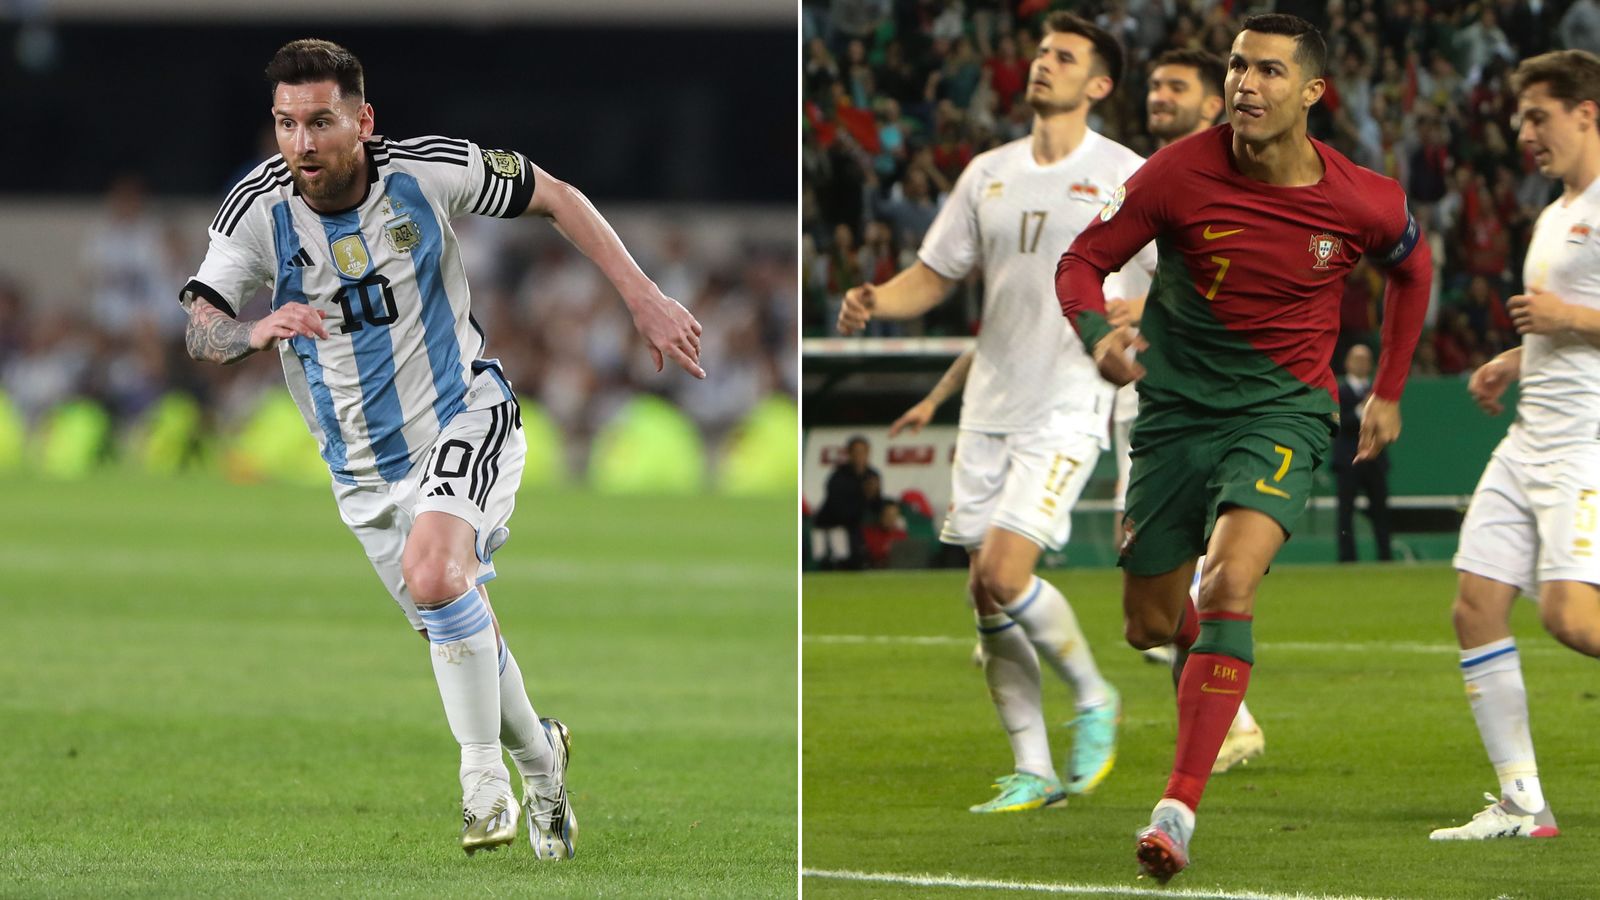 Cristiano Ronaldo Vs Lionel Messi - Who Has The Better Clothing Range?